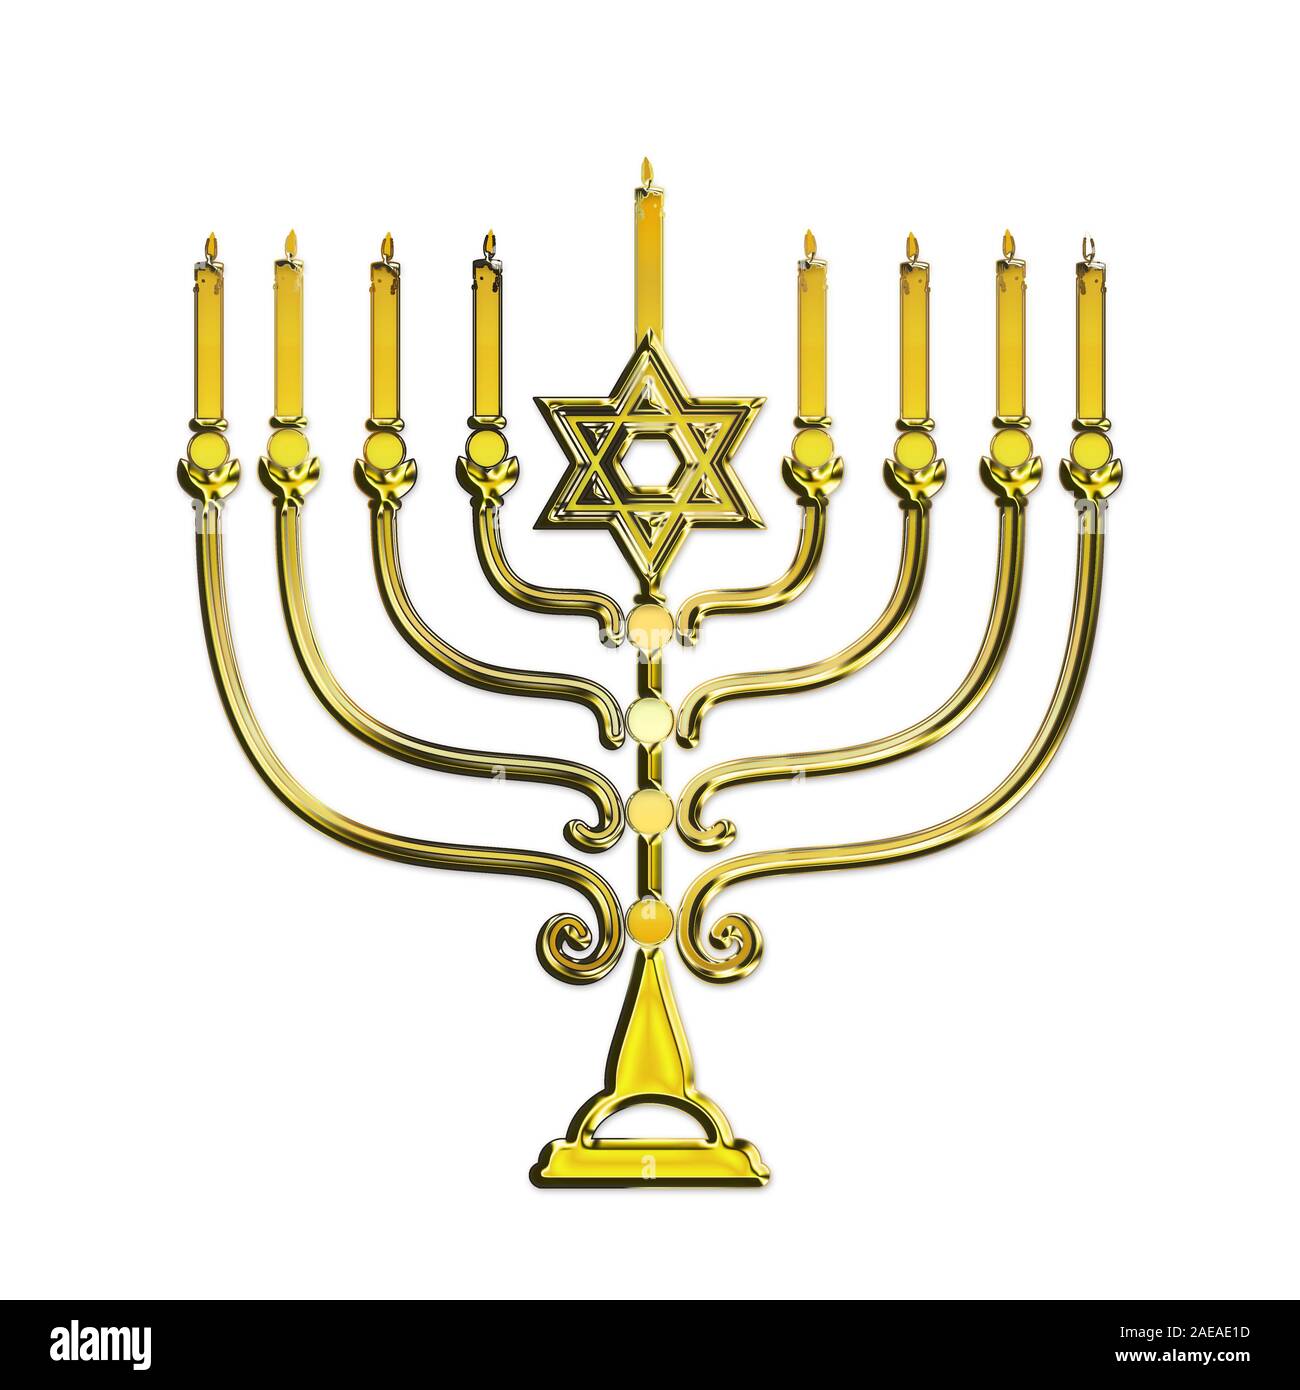 Jewish menorah for Hanukkah, Jewish festival of lights decoration symbol. Stock Photo